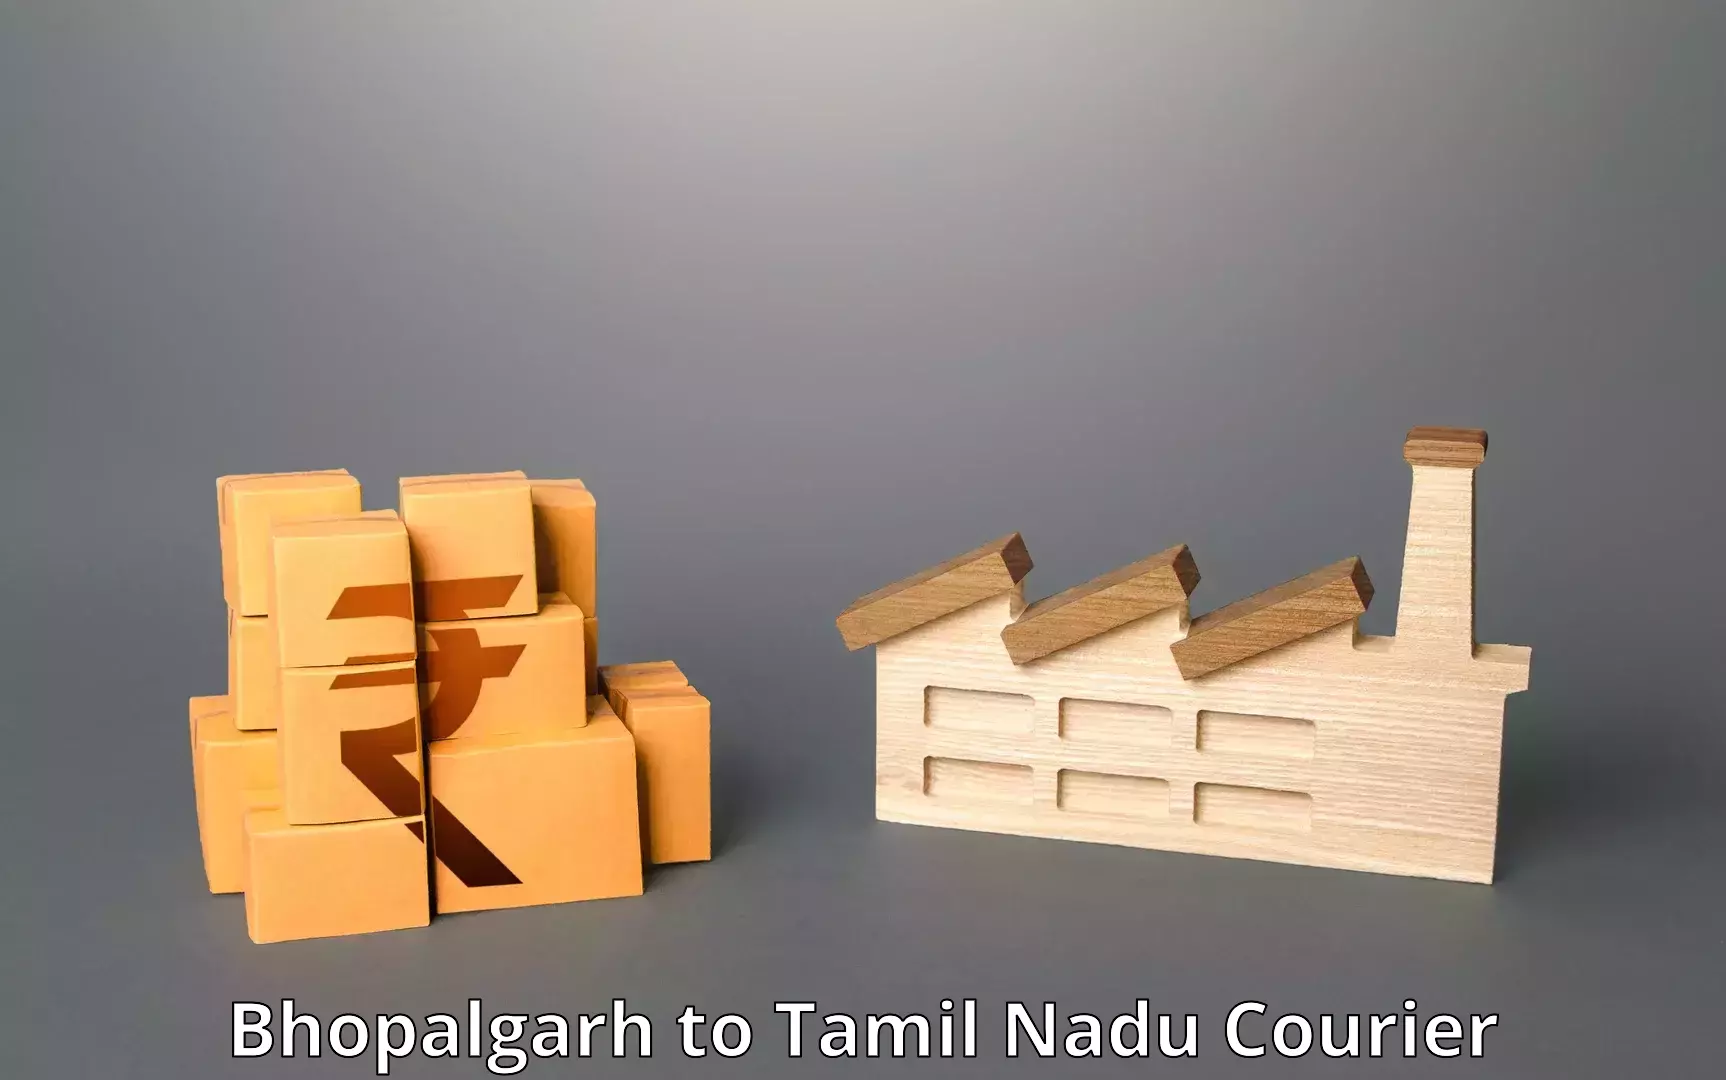 High-performance logistics Bhopalgarh to Tamil Nadu